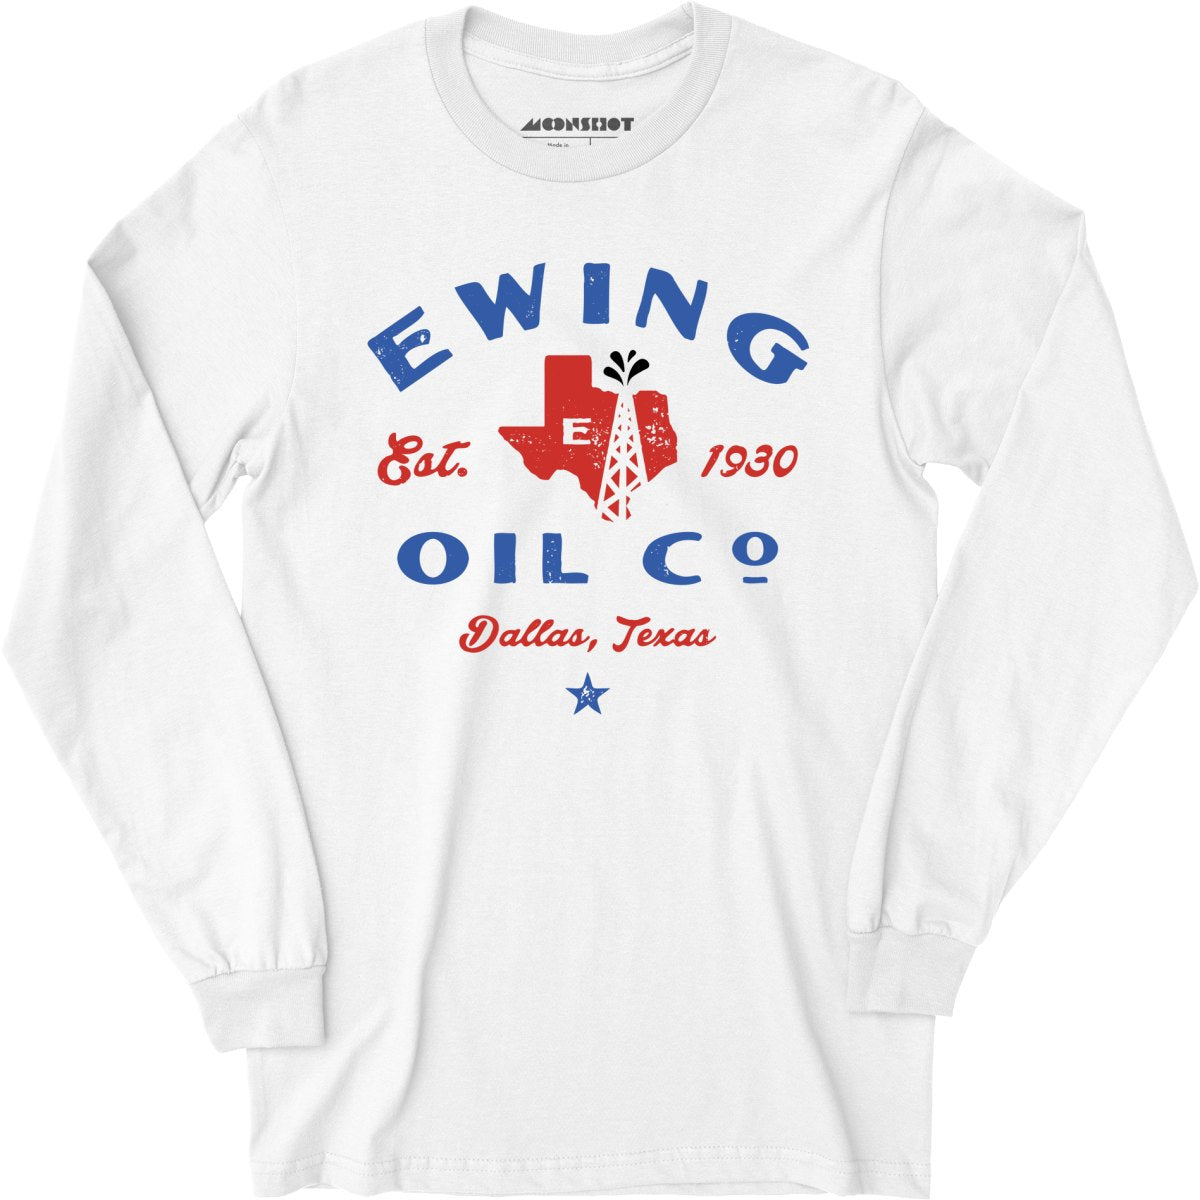 Ewing Oil Co - Dallas, Texas - Long Sleeve T-Shirt